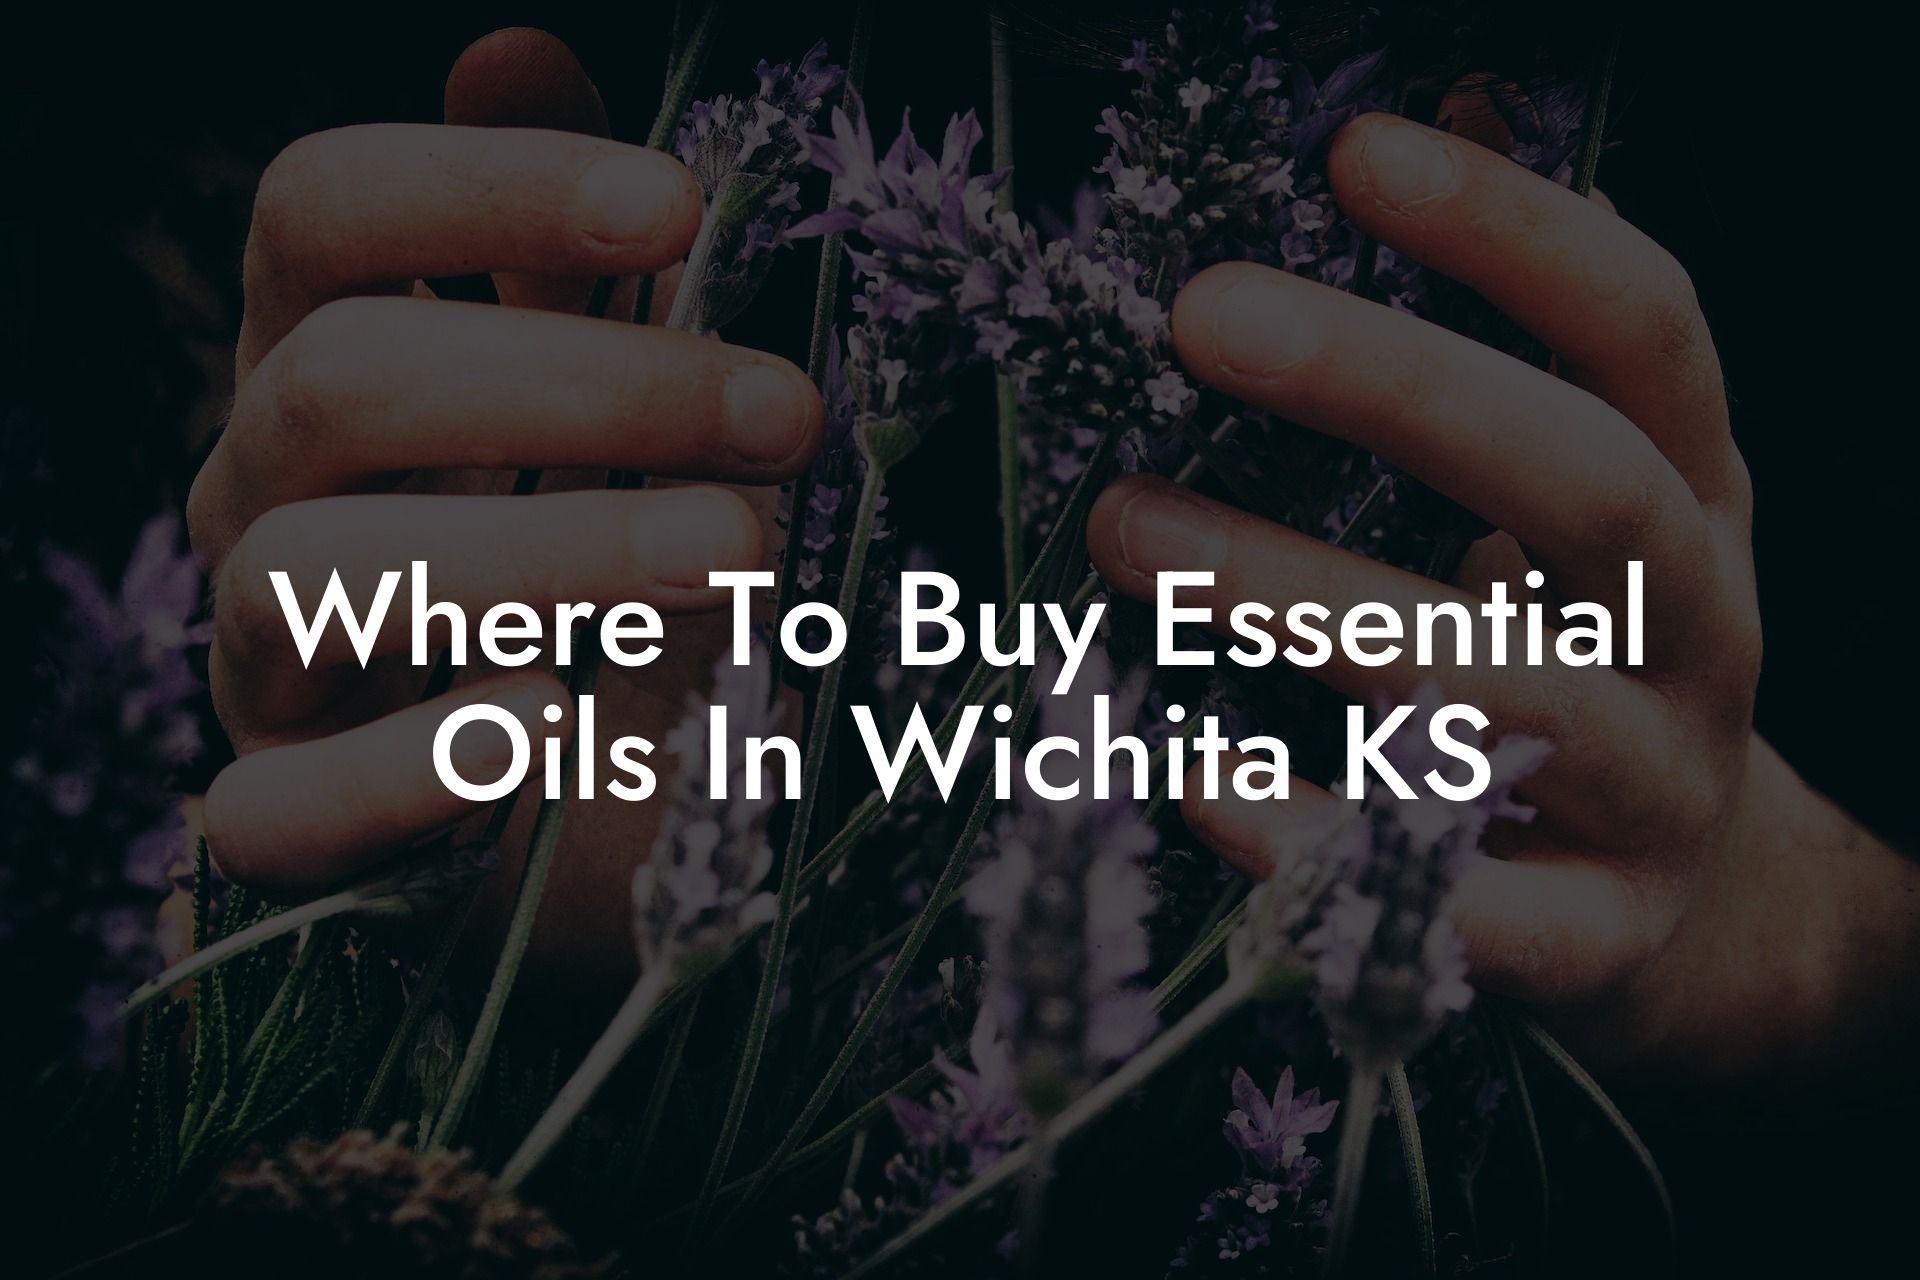 Where To Buy Essential Oils In Wichita KS